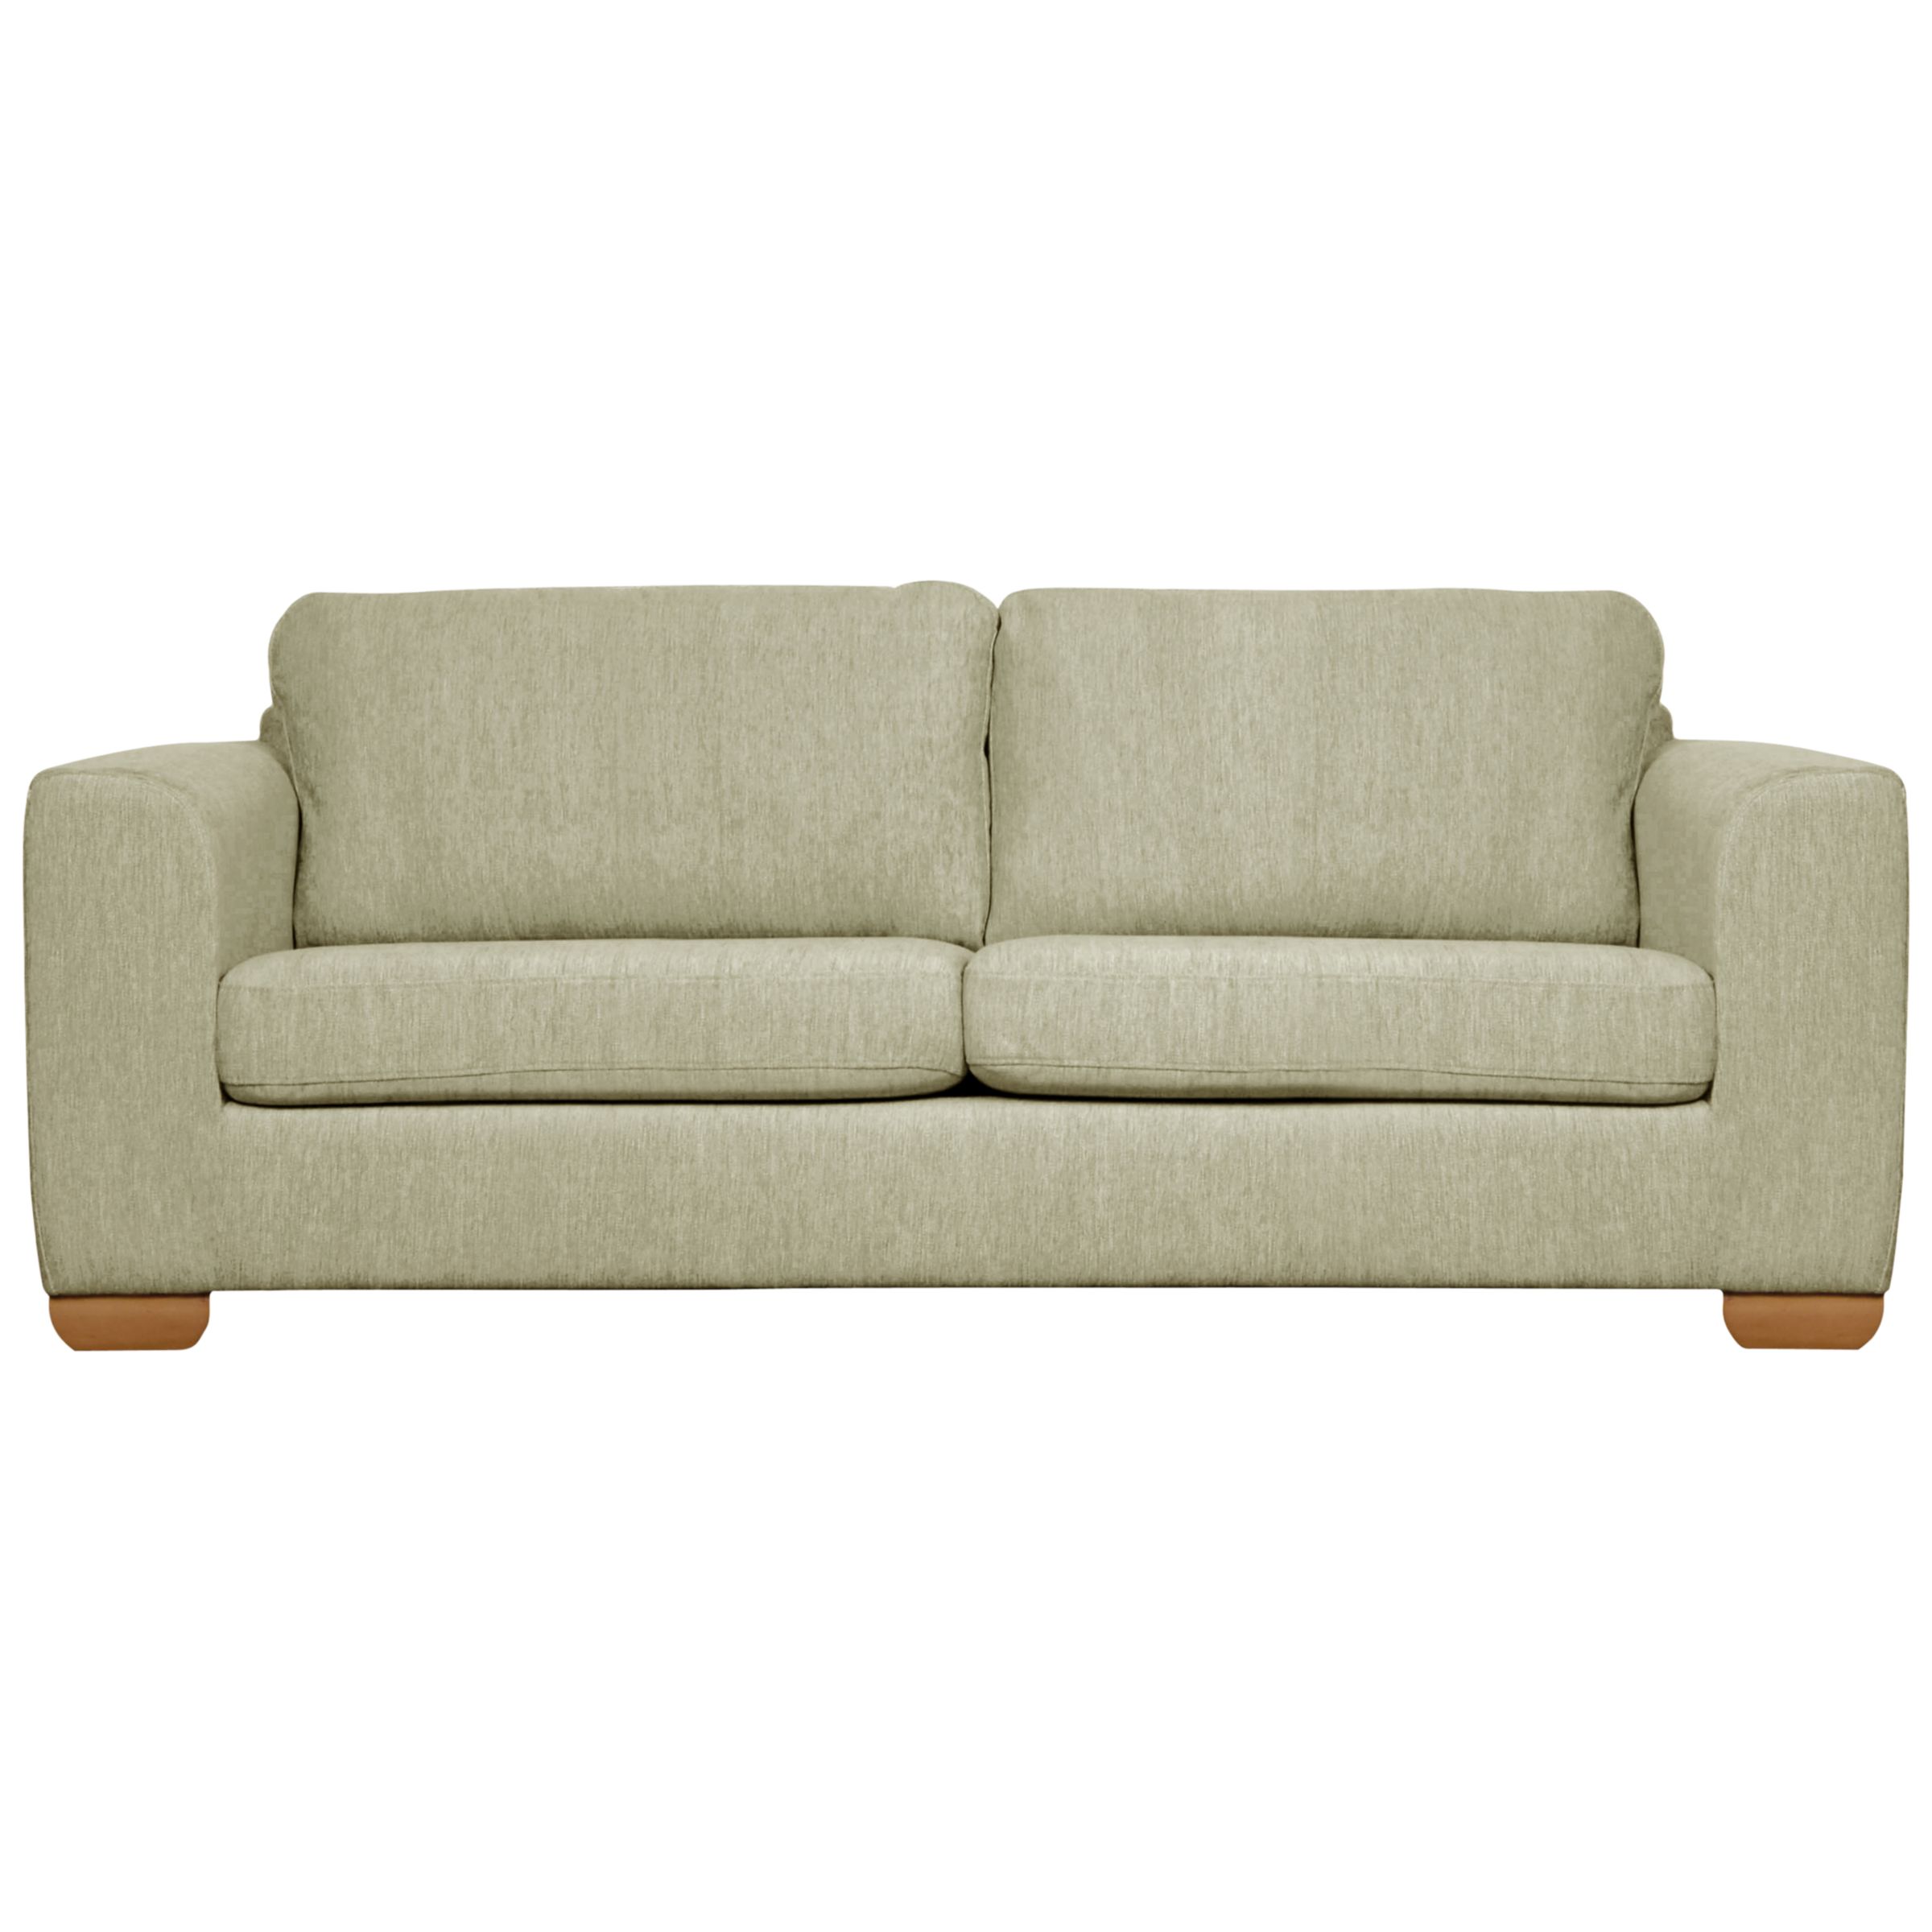 John Lewis Felix Large Sofa, Toast/ Light Leg, width 202cm